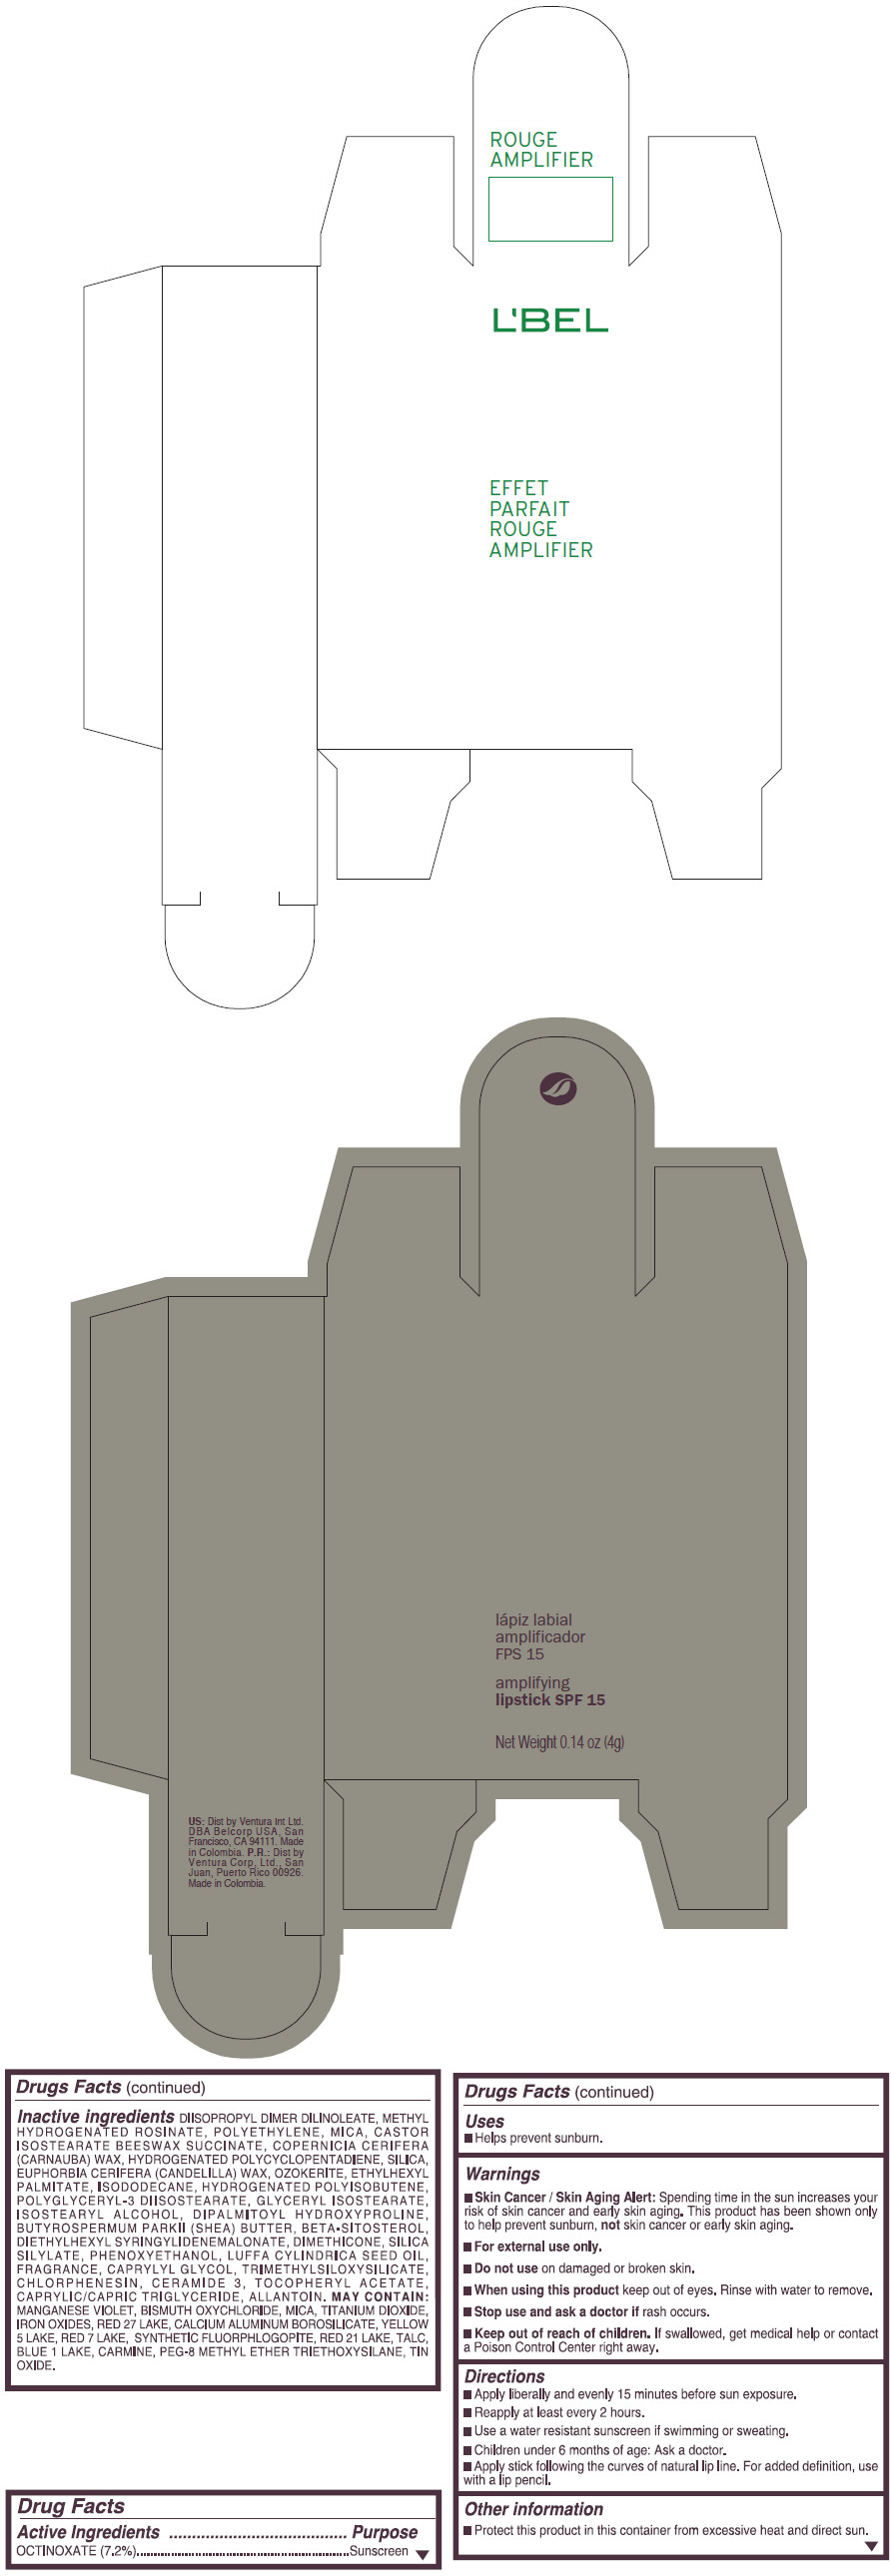 PRINCIPAL DISPLAY PANEL - 4 g Tube Box - (ROUGE PROVOCATION) - RED